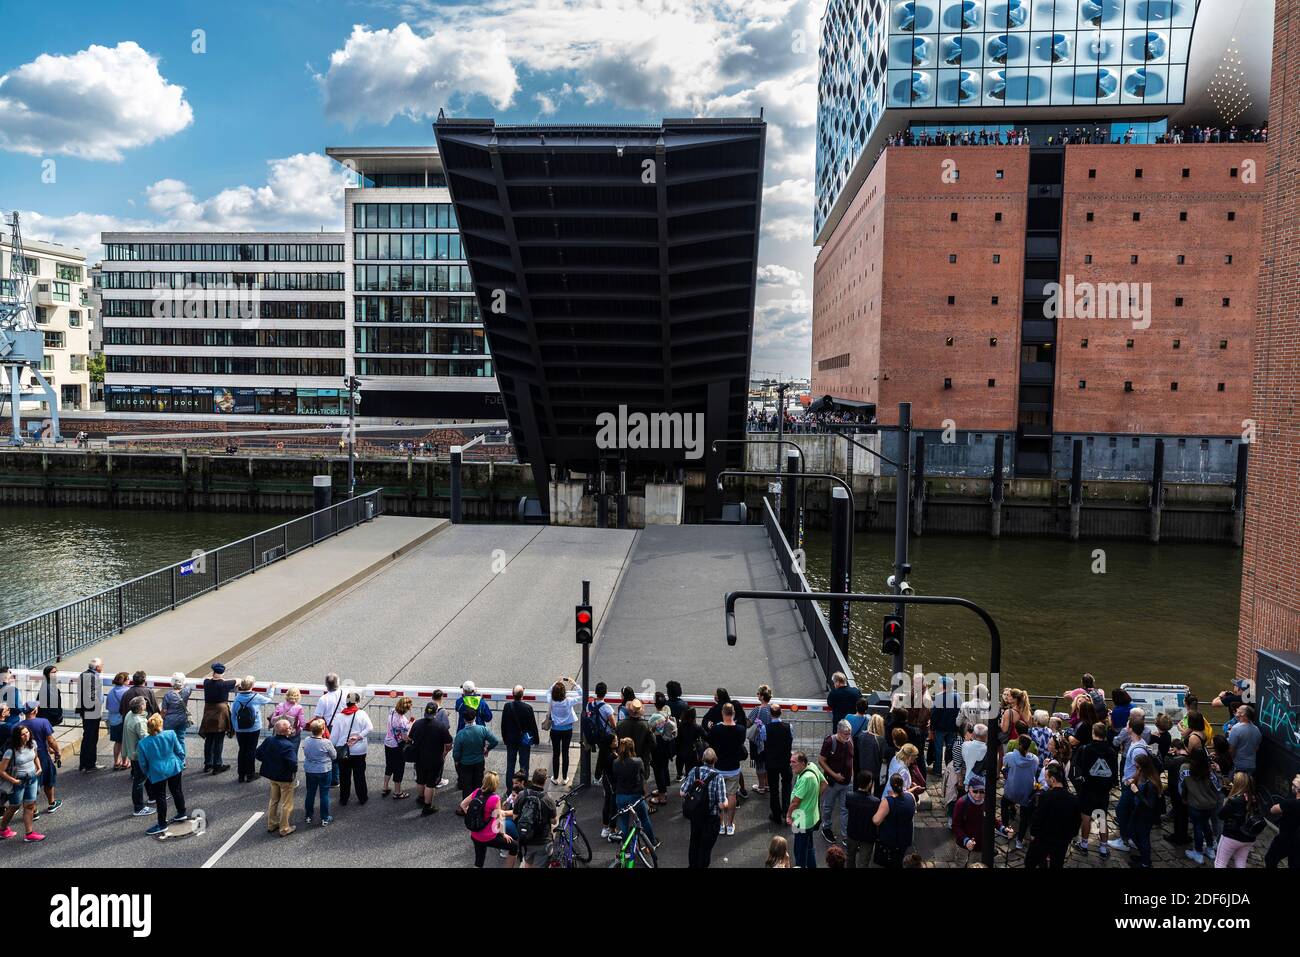 Hamburg, Germany - August 21, 2019: Facade of the Elbphilharmonie, Elbe Philharmonic Hall, and opened Mahatma Gandhi Bridge with people waiting in Haf Stock Photo